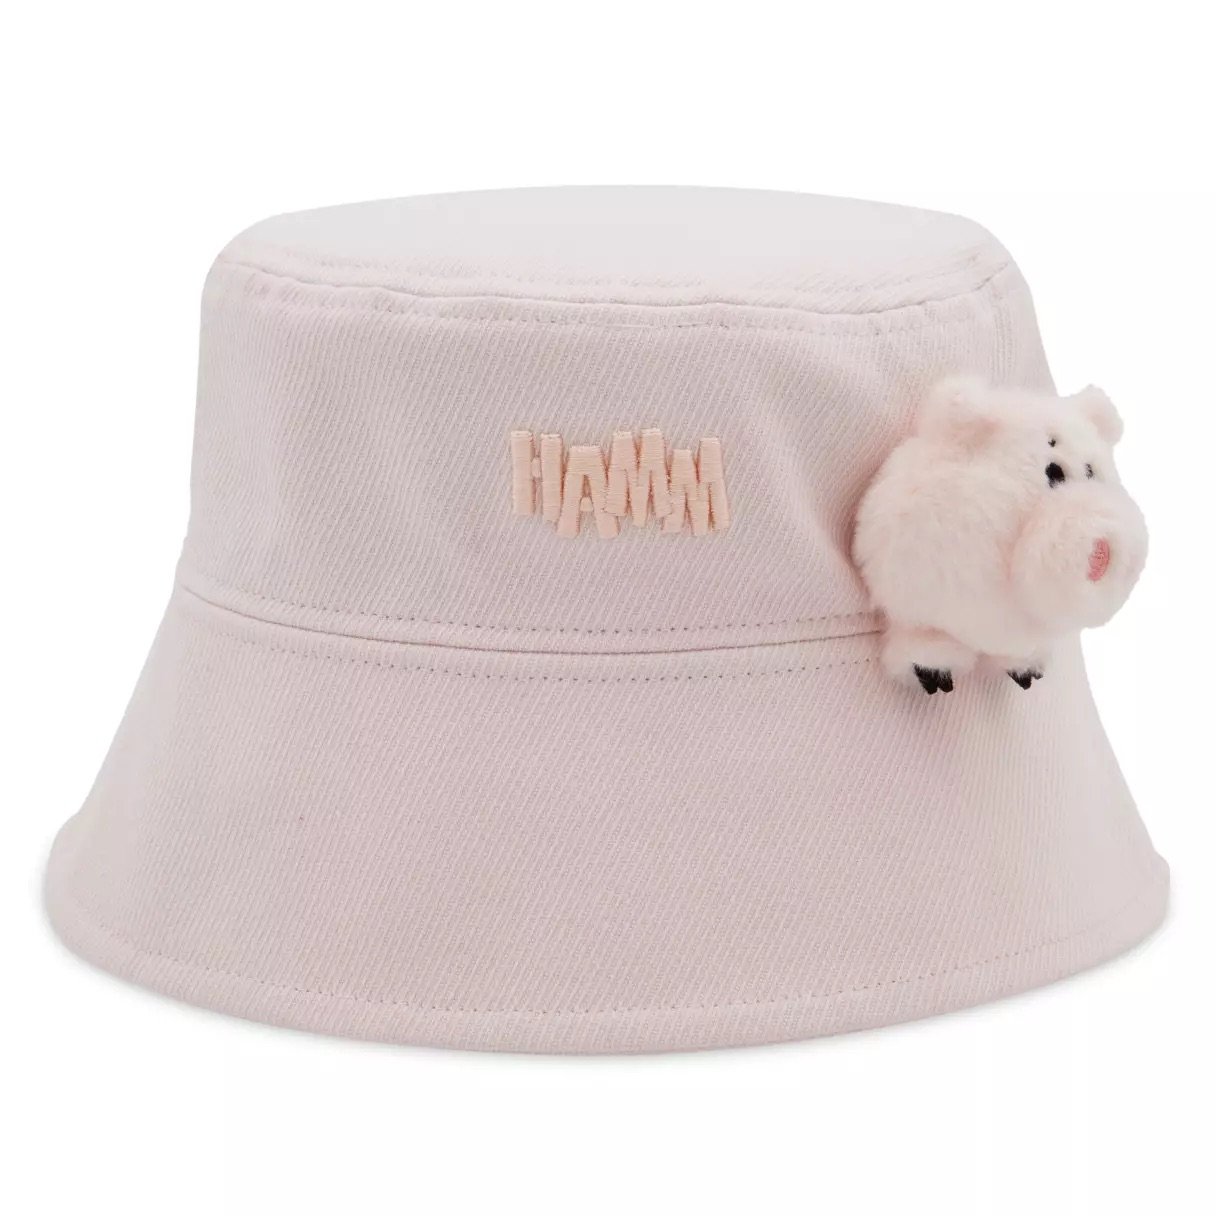 Hamm Plush Bucket Hat